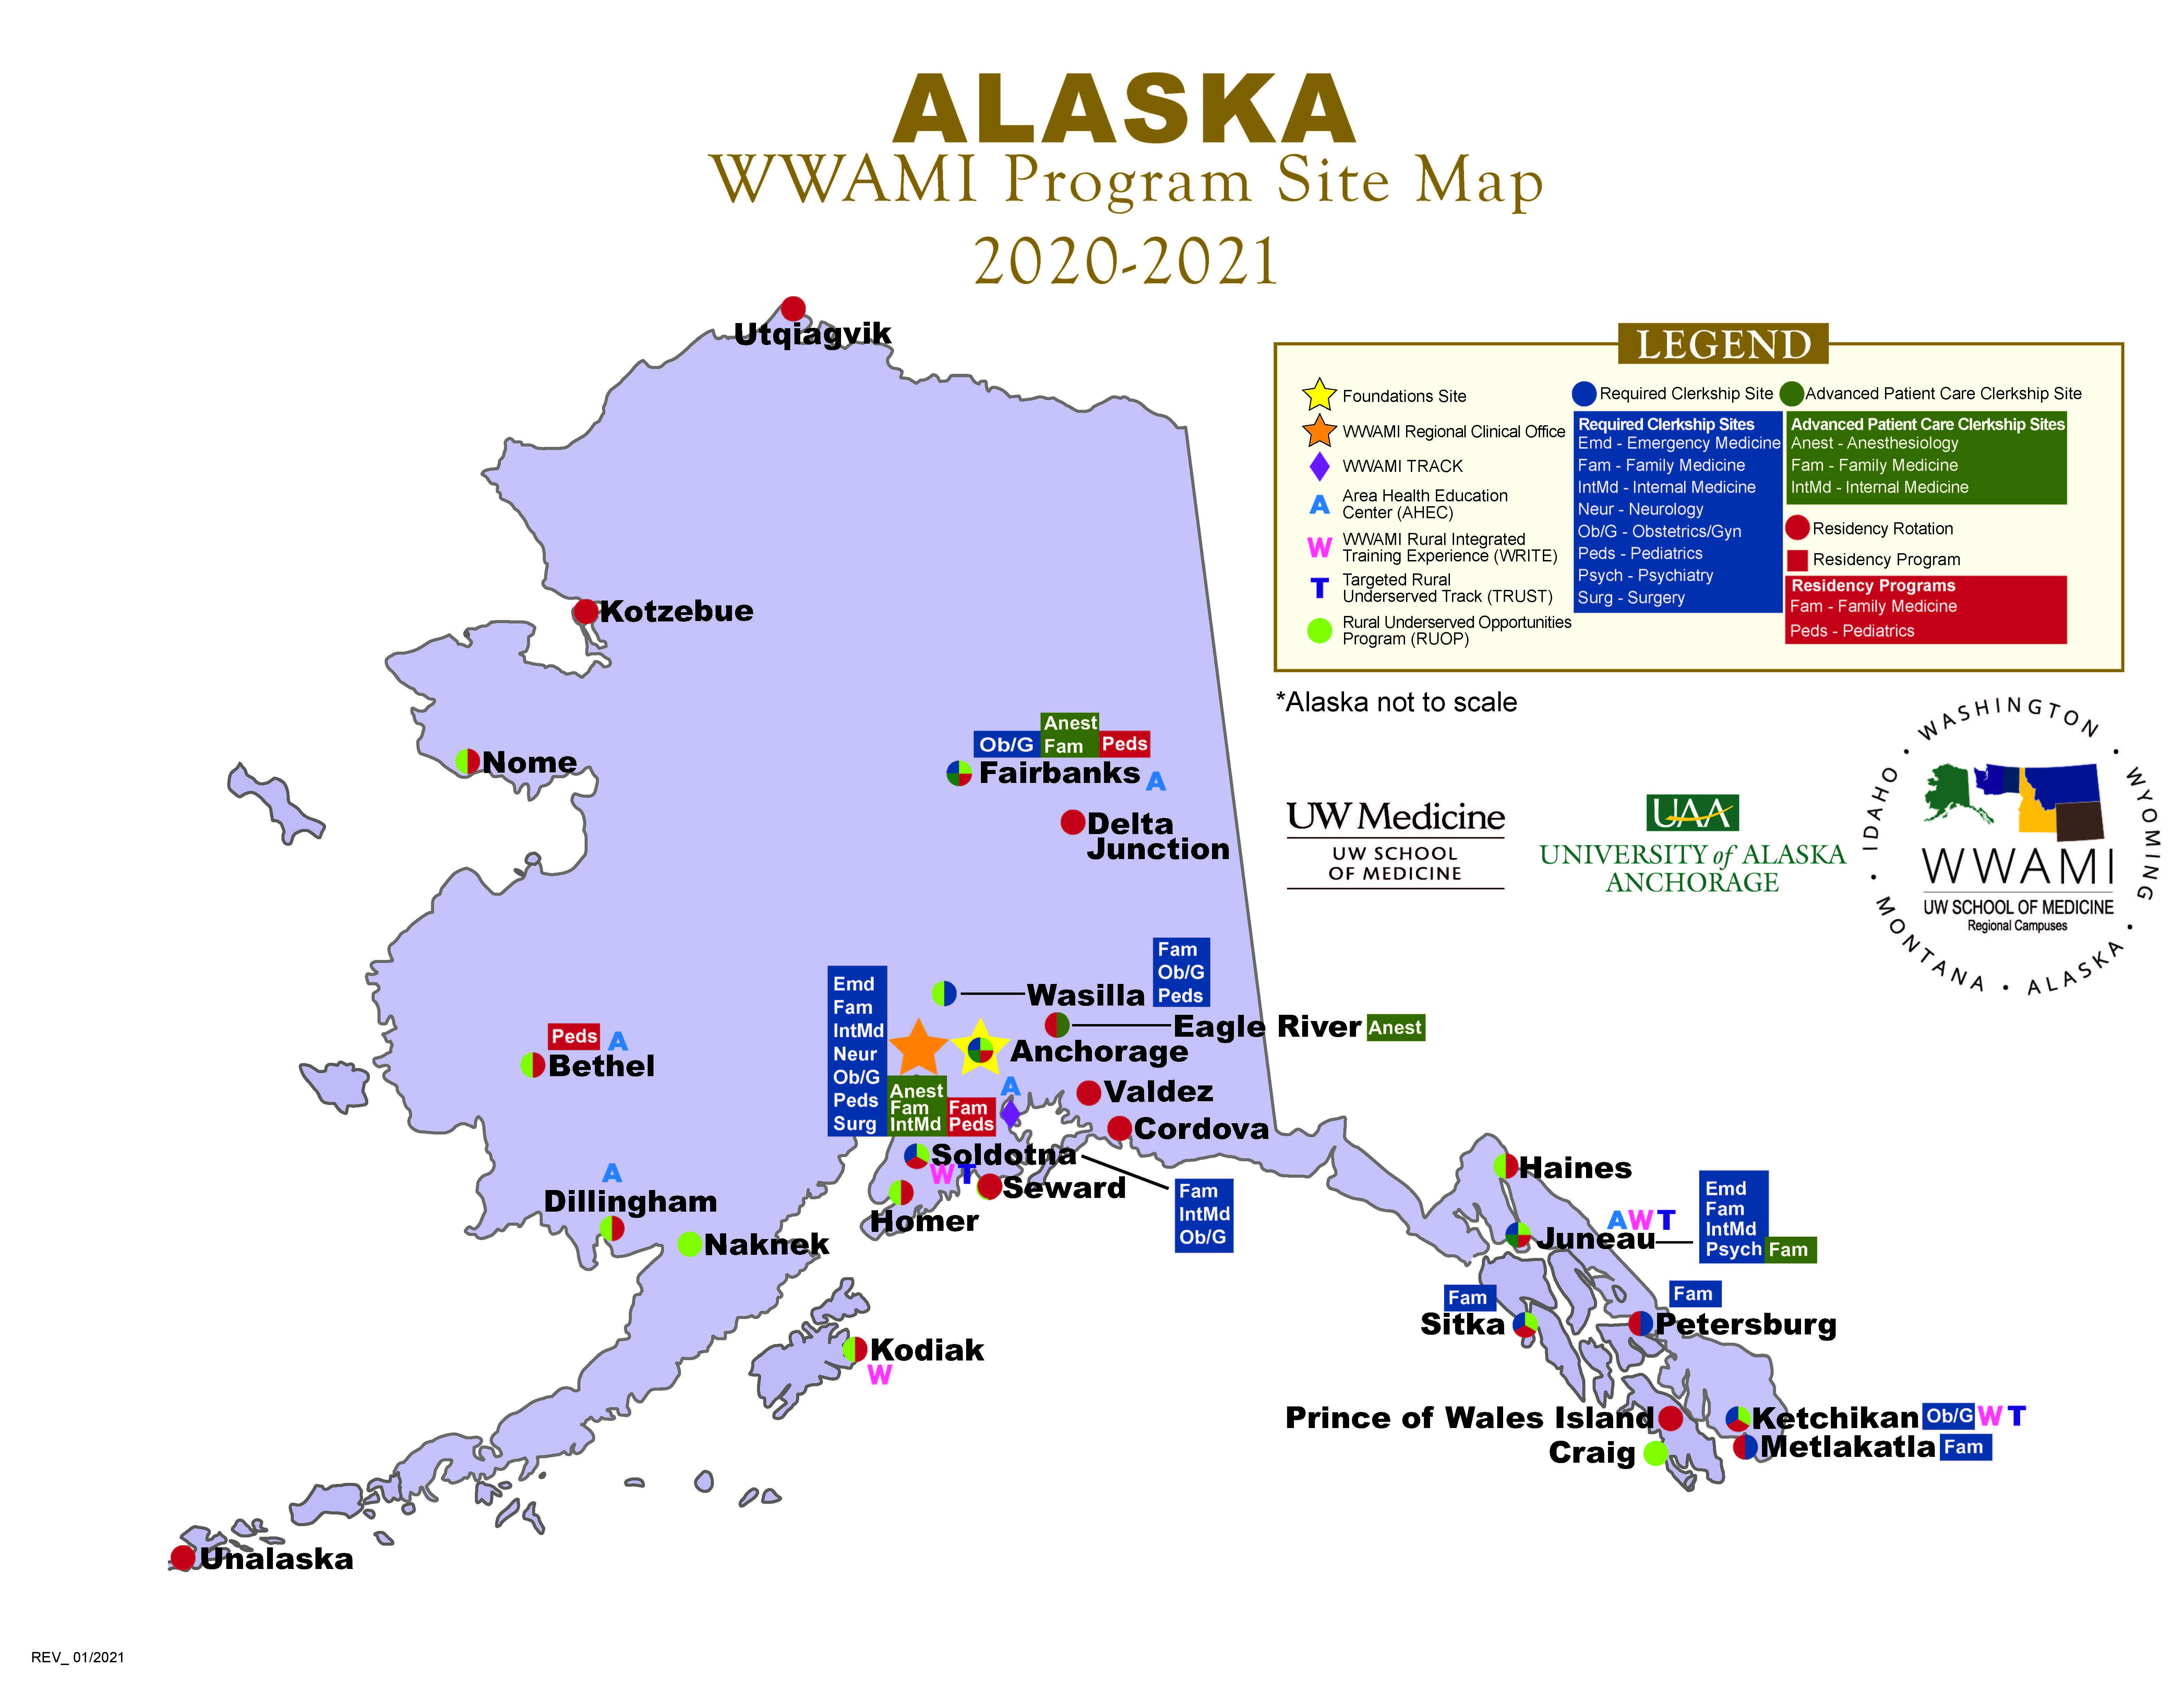 Alaska WWAMI Program Site Map 2020-2021